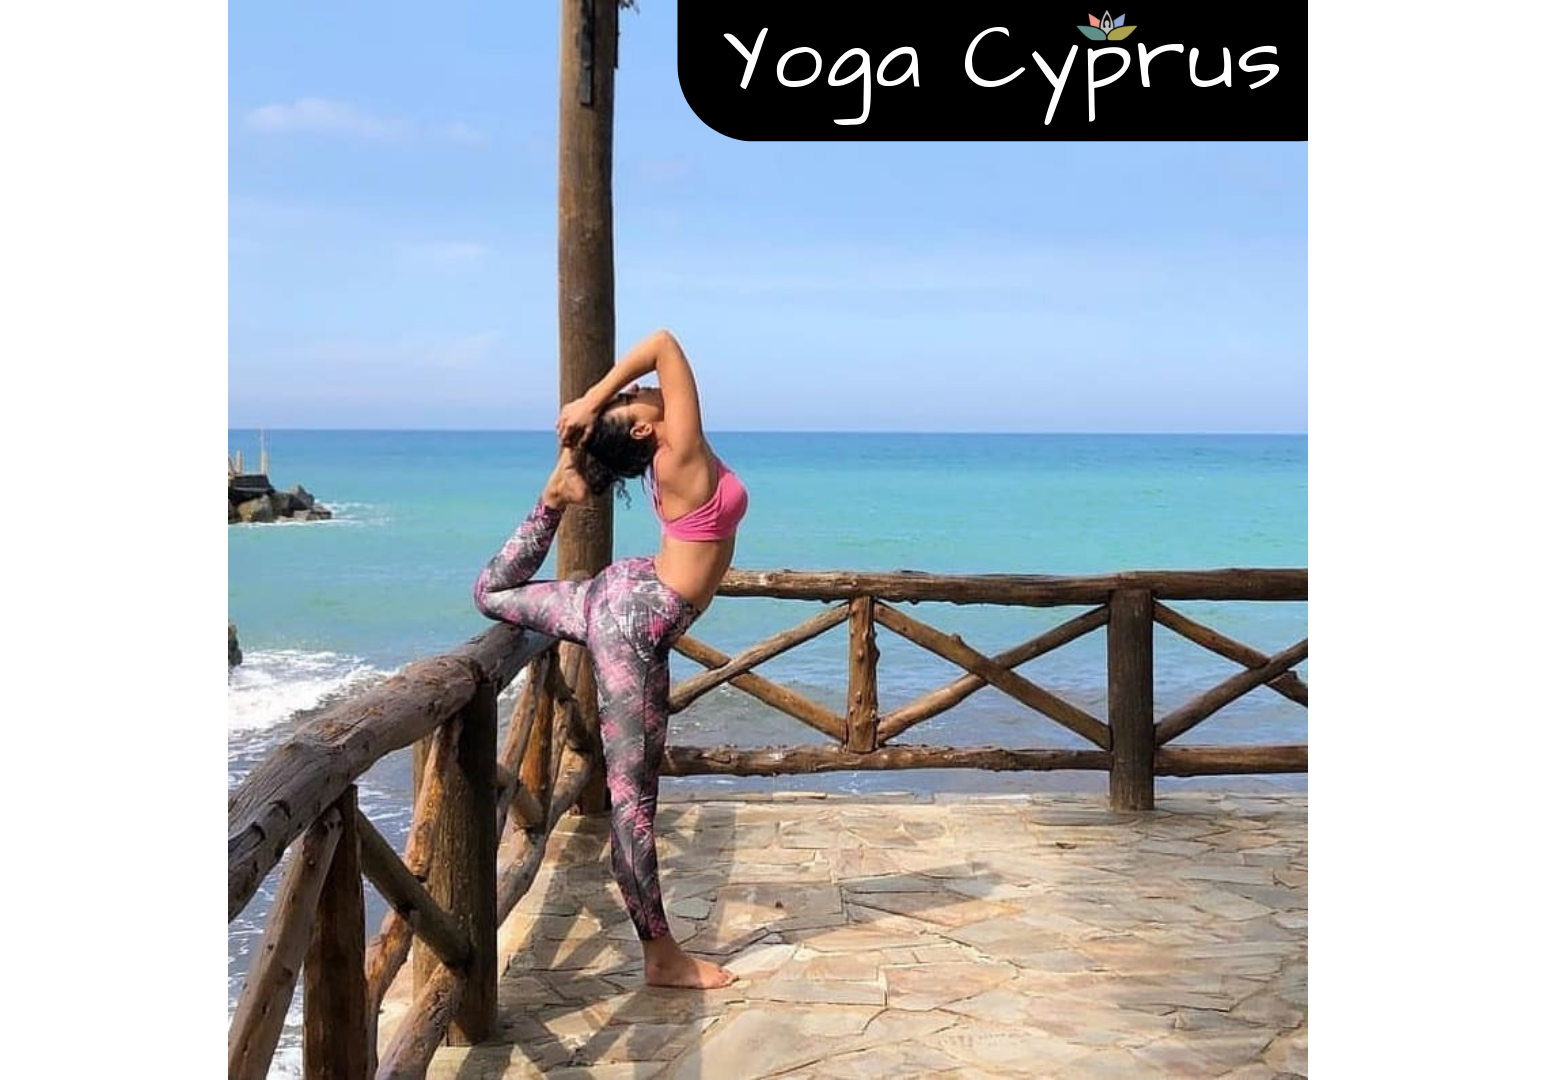 Yoga Cyprus